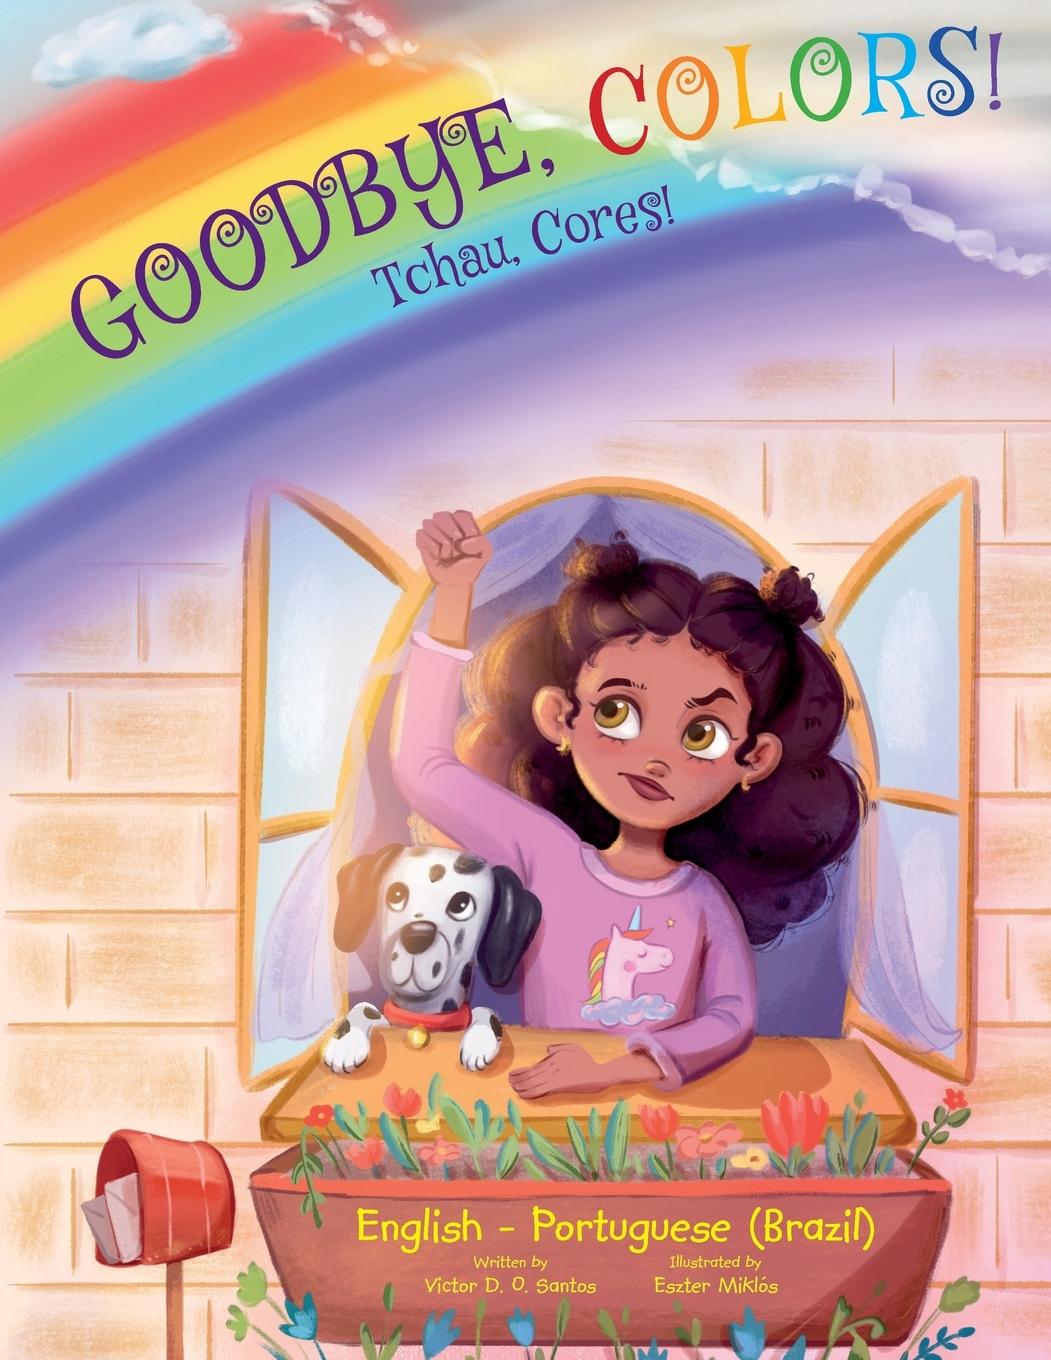 Kniha Goodbye, Colors! / Tchau, Cores! - Portuguese (Brazil) and English Edition 